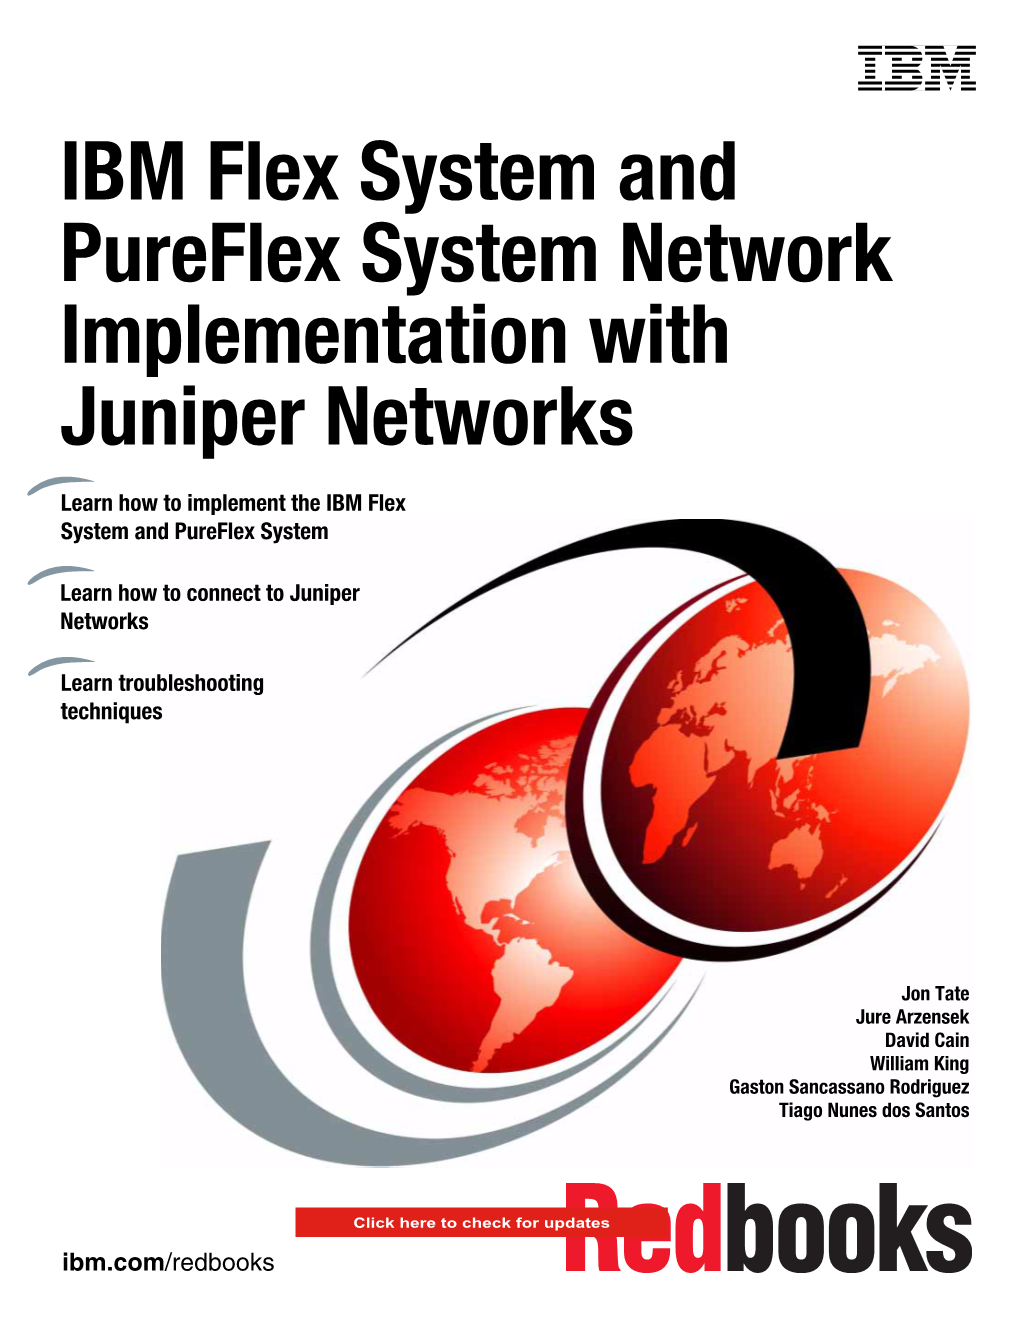 IBM Flex System and Pureflex System and Juniper